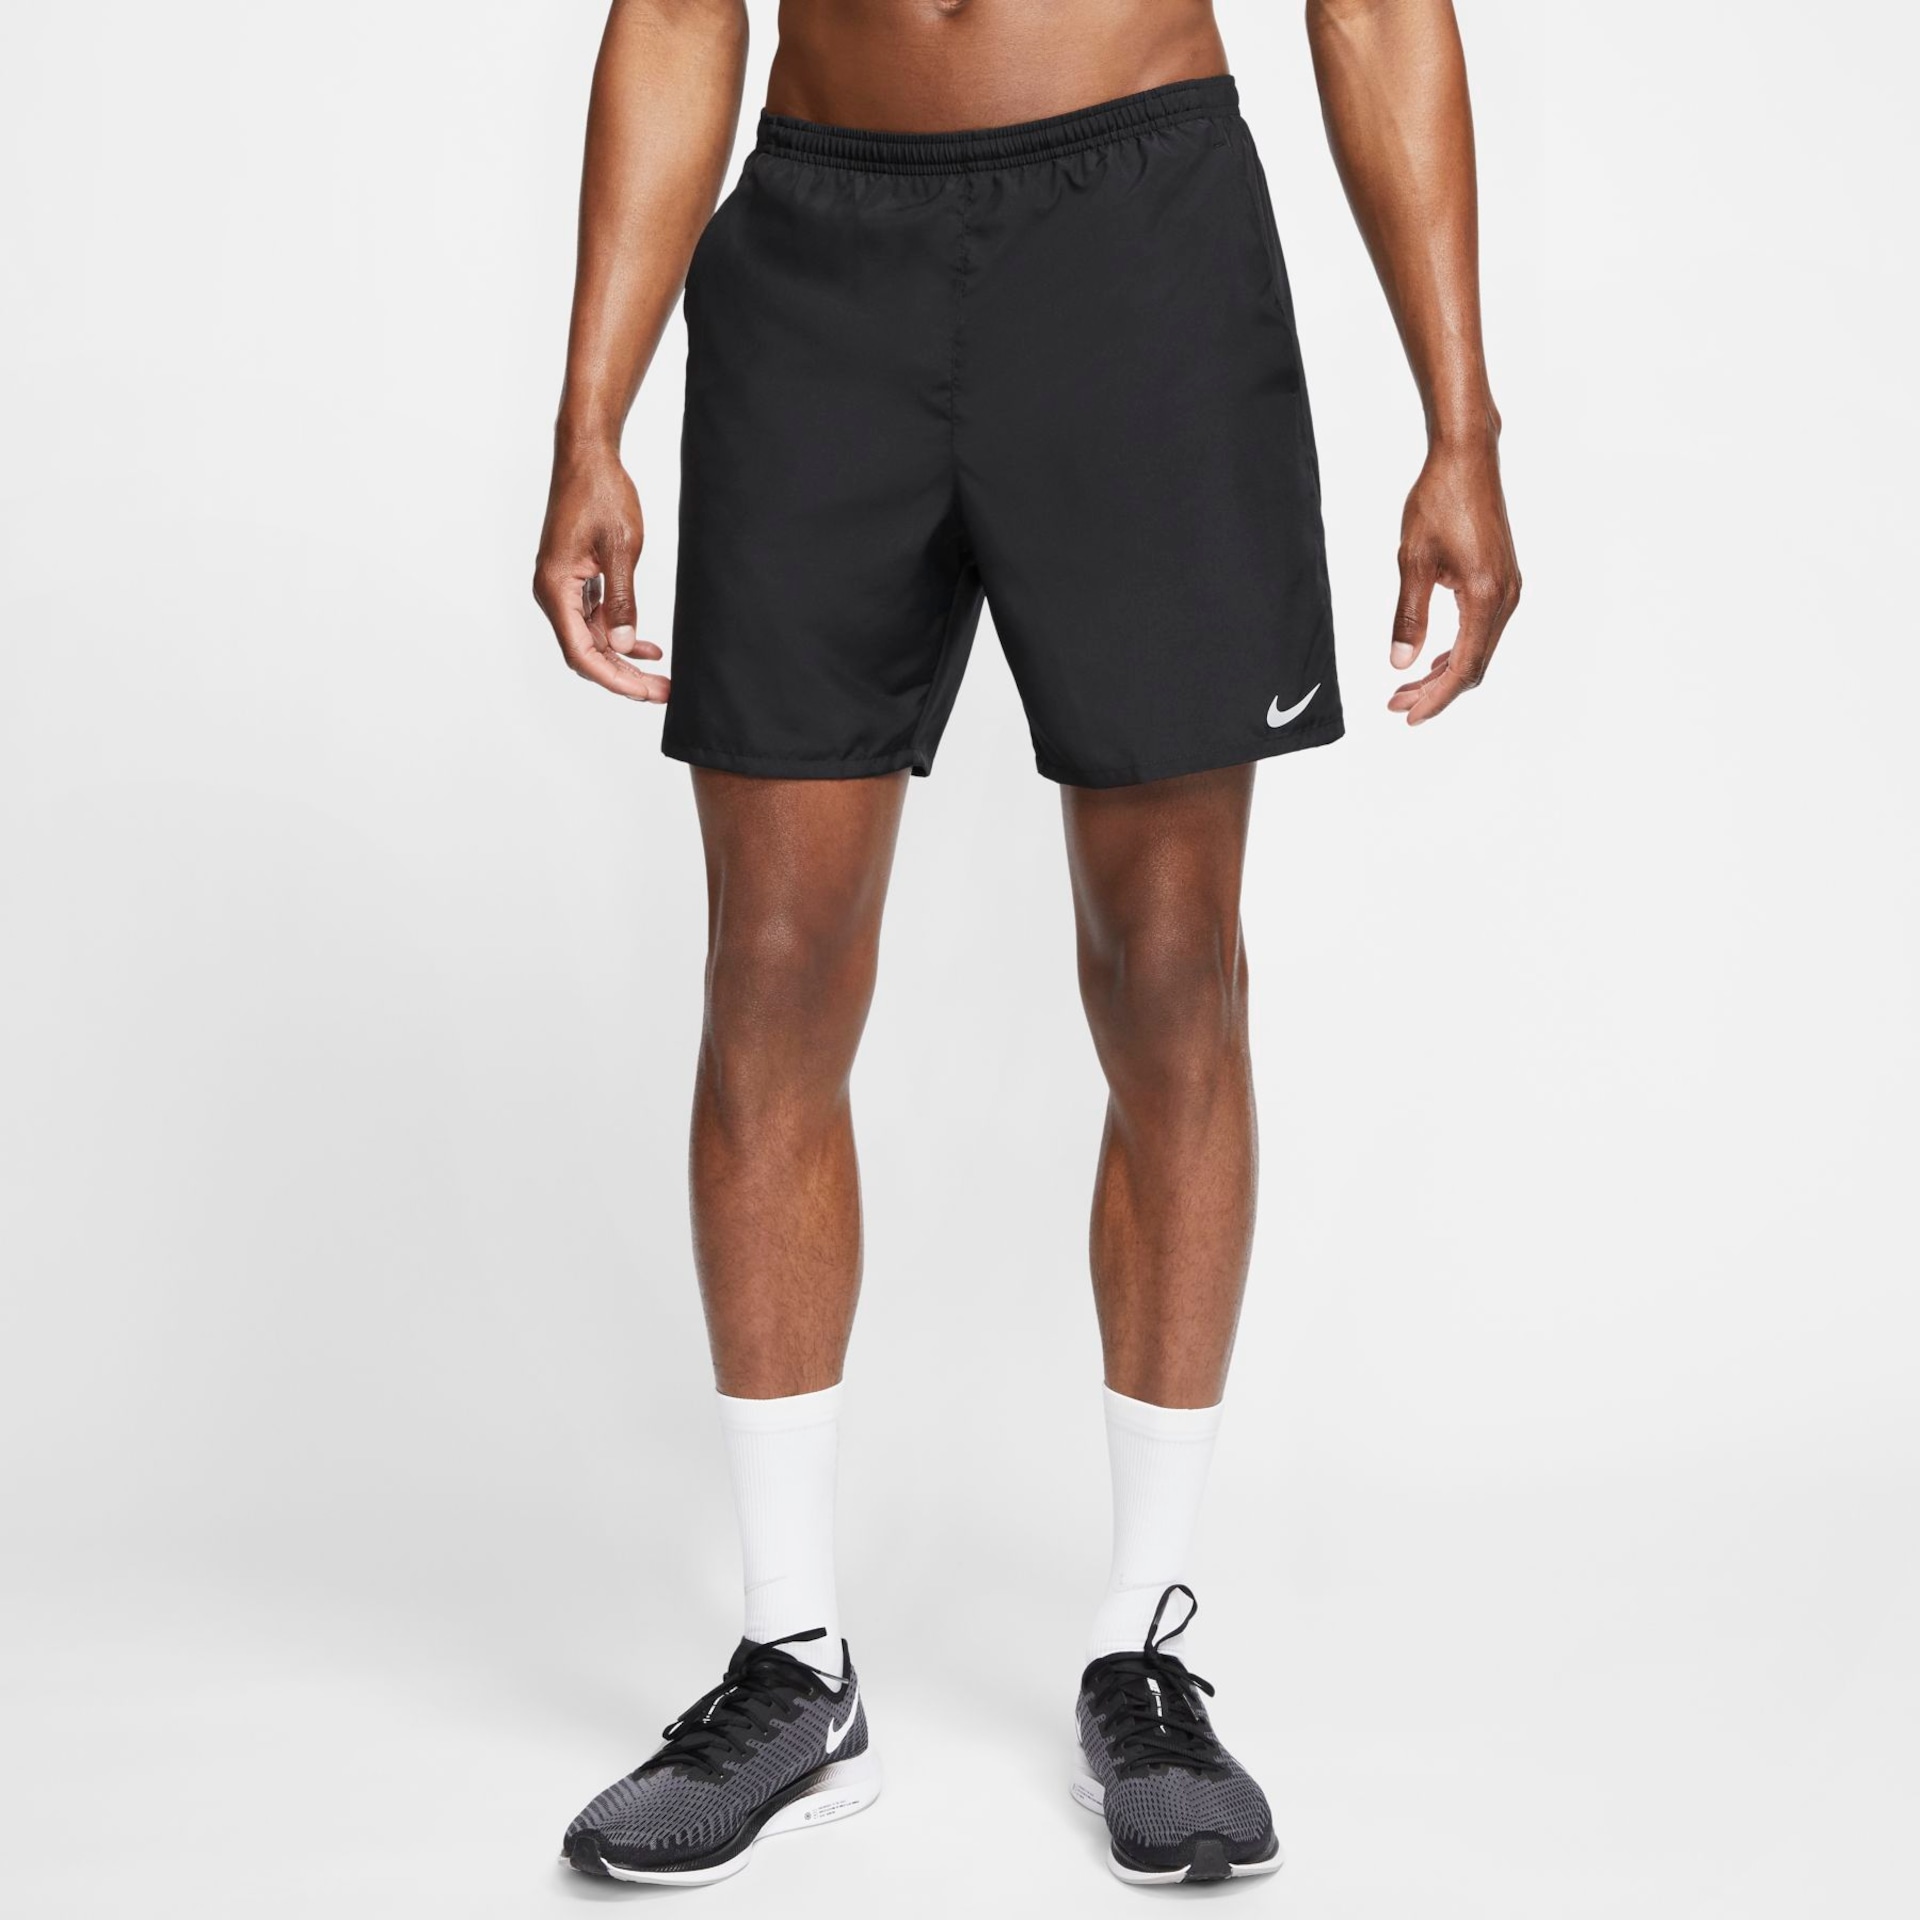 Bermuda Nike Treino Dri-Fit Masculino Preto | vlr.eng.br